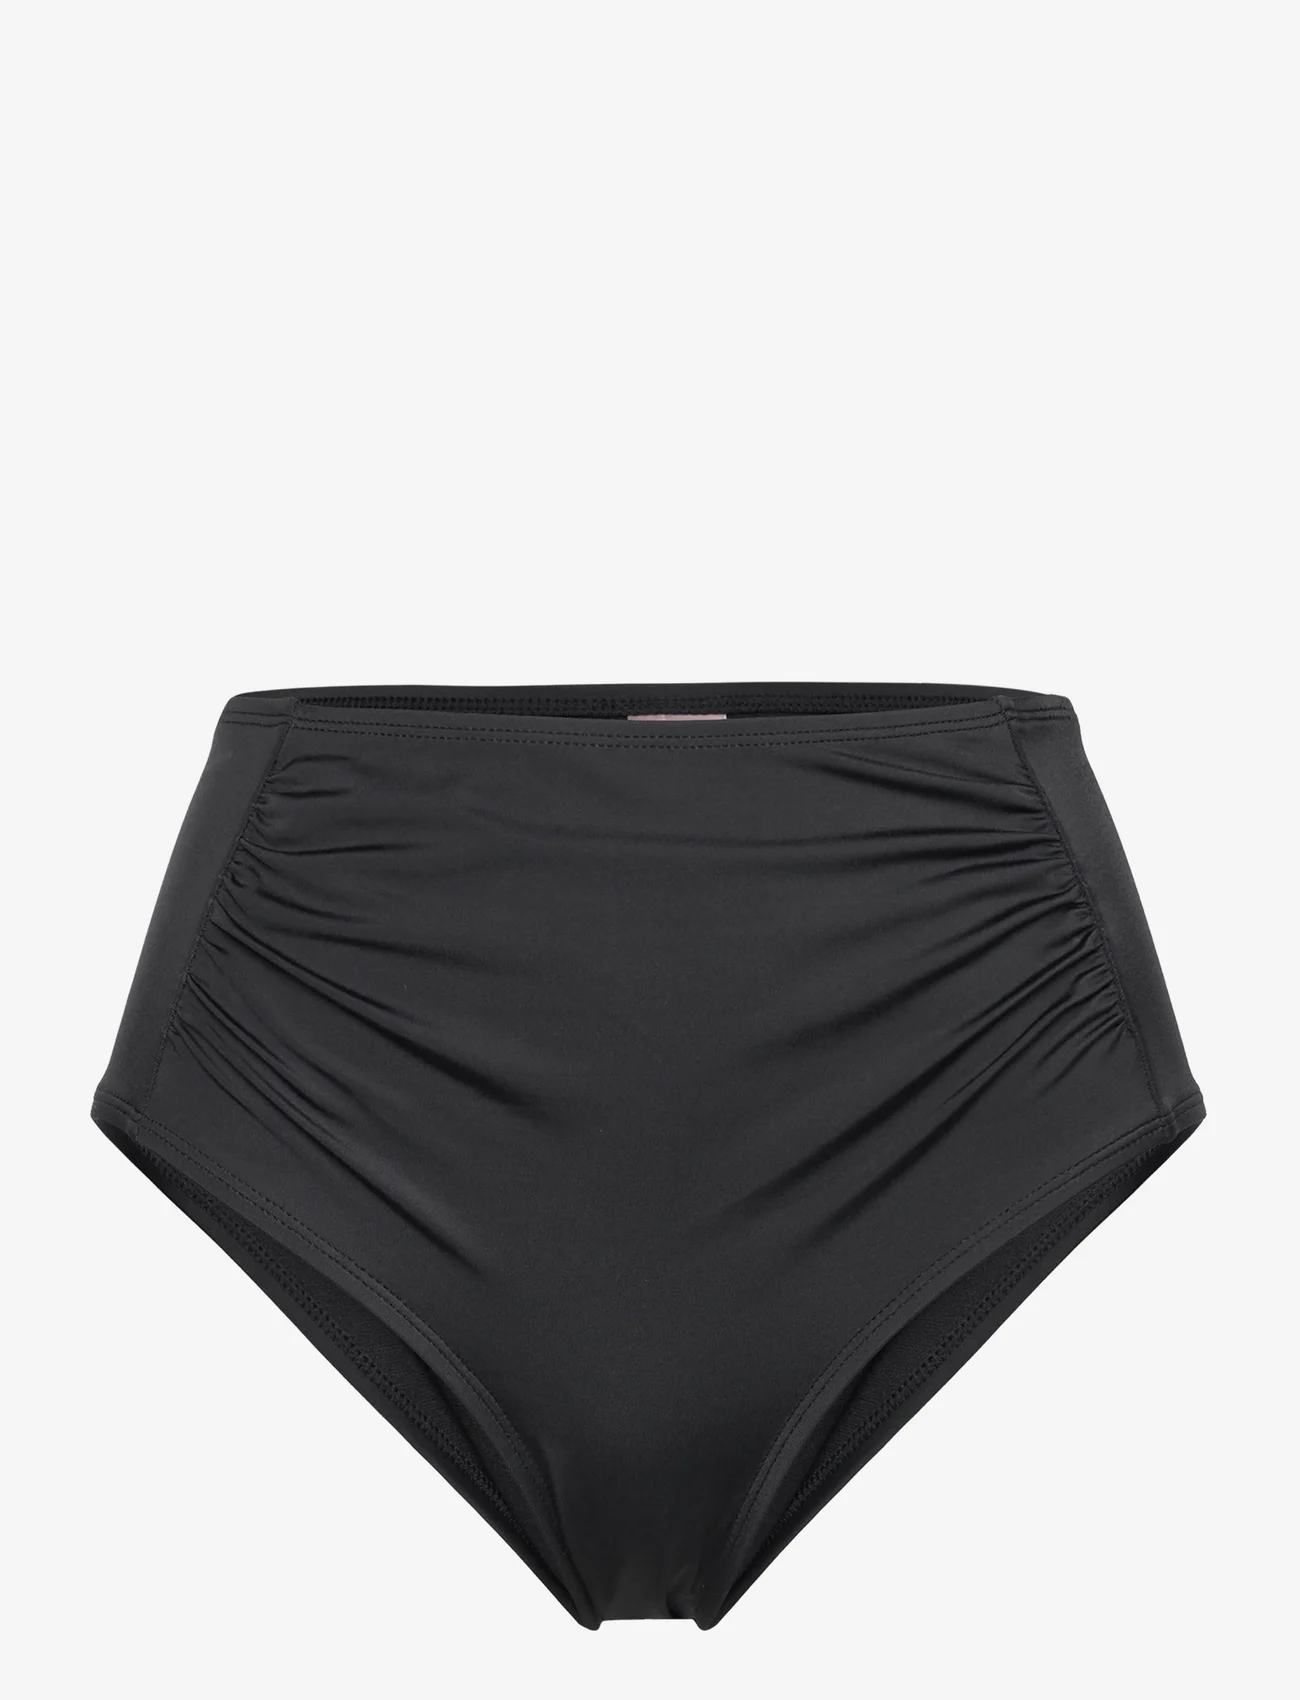 Hunkemöller - Luxe shaping cheeky hw - high waist bikini bottoms - nero - 0